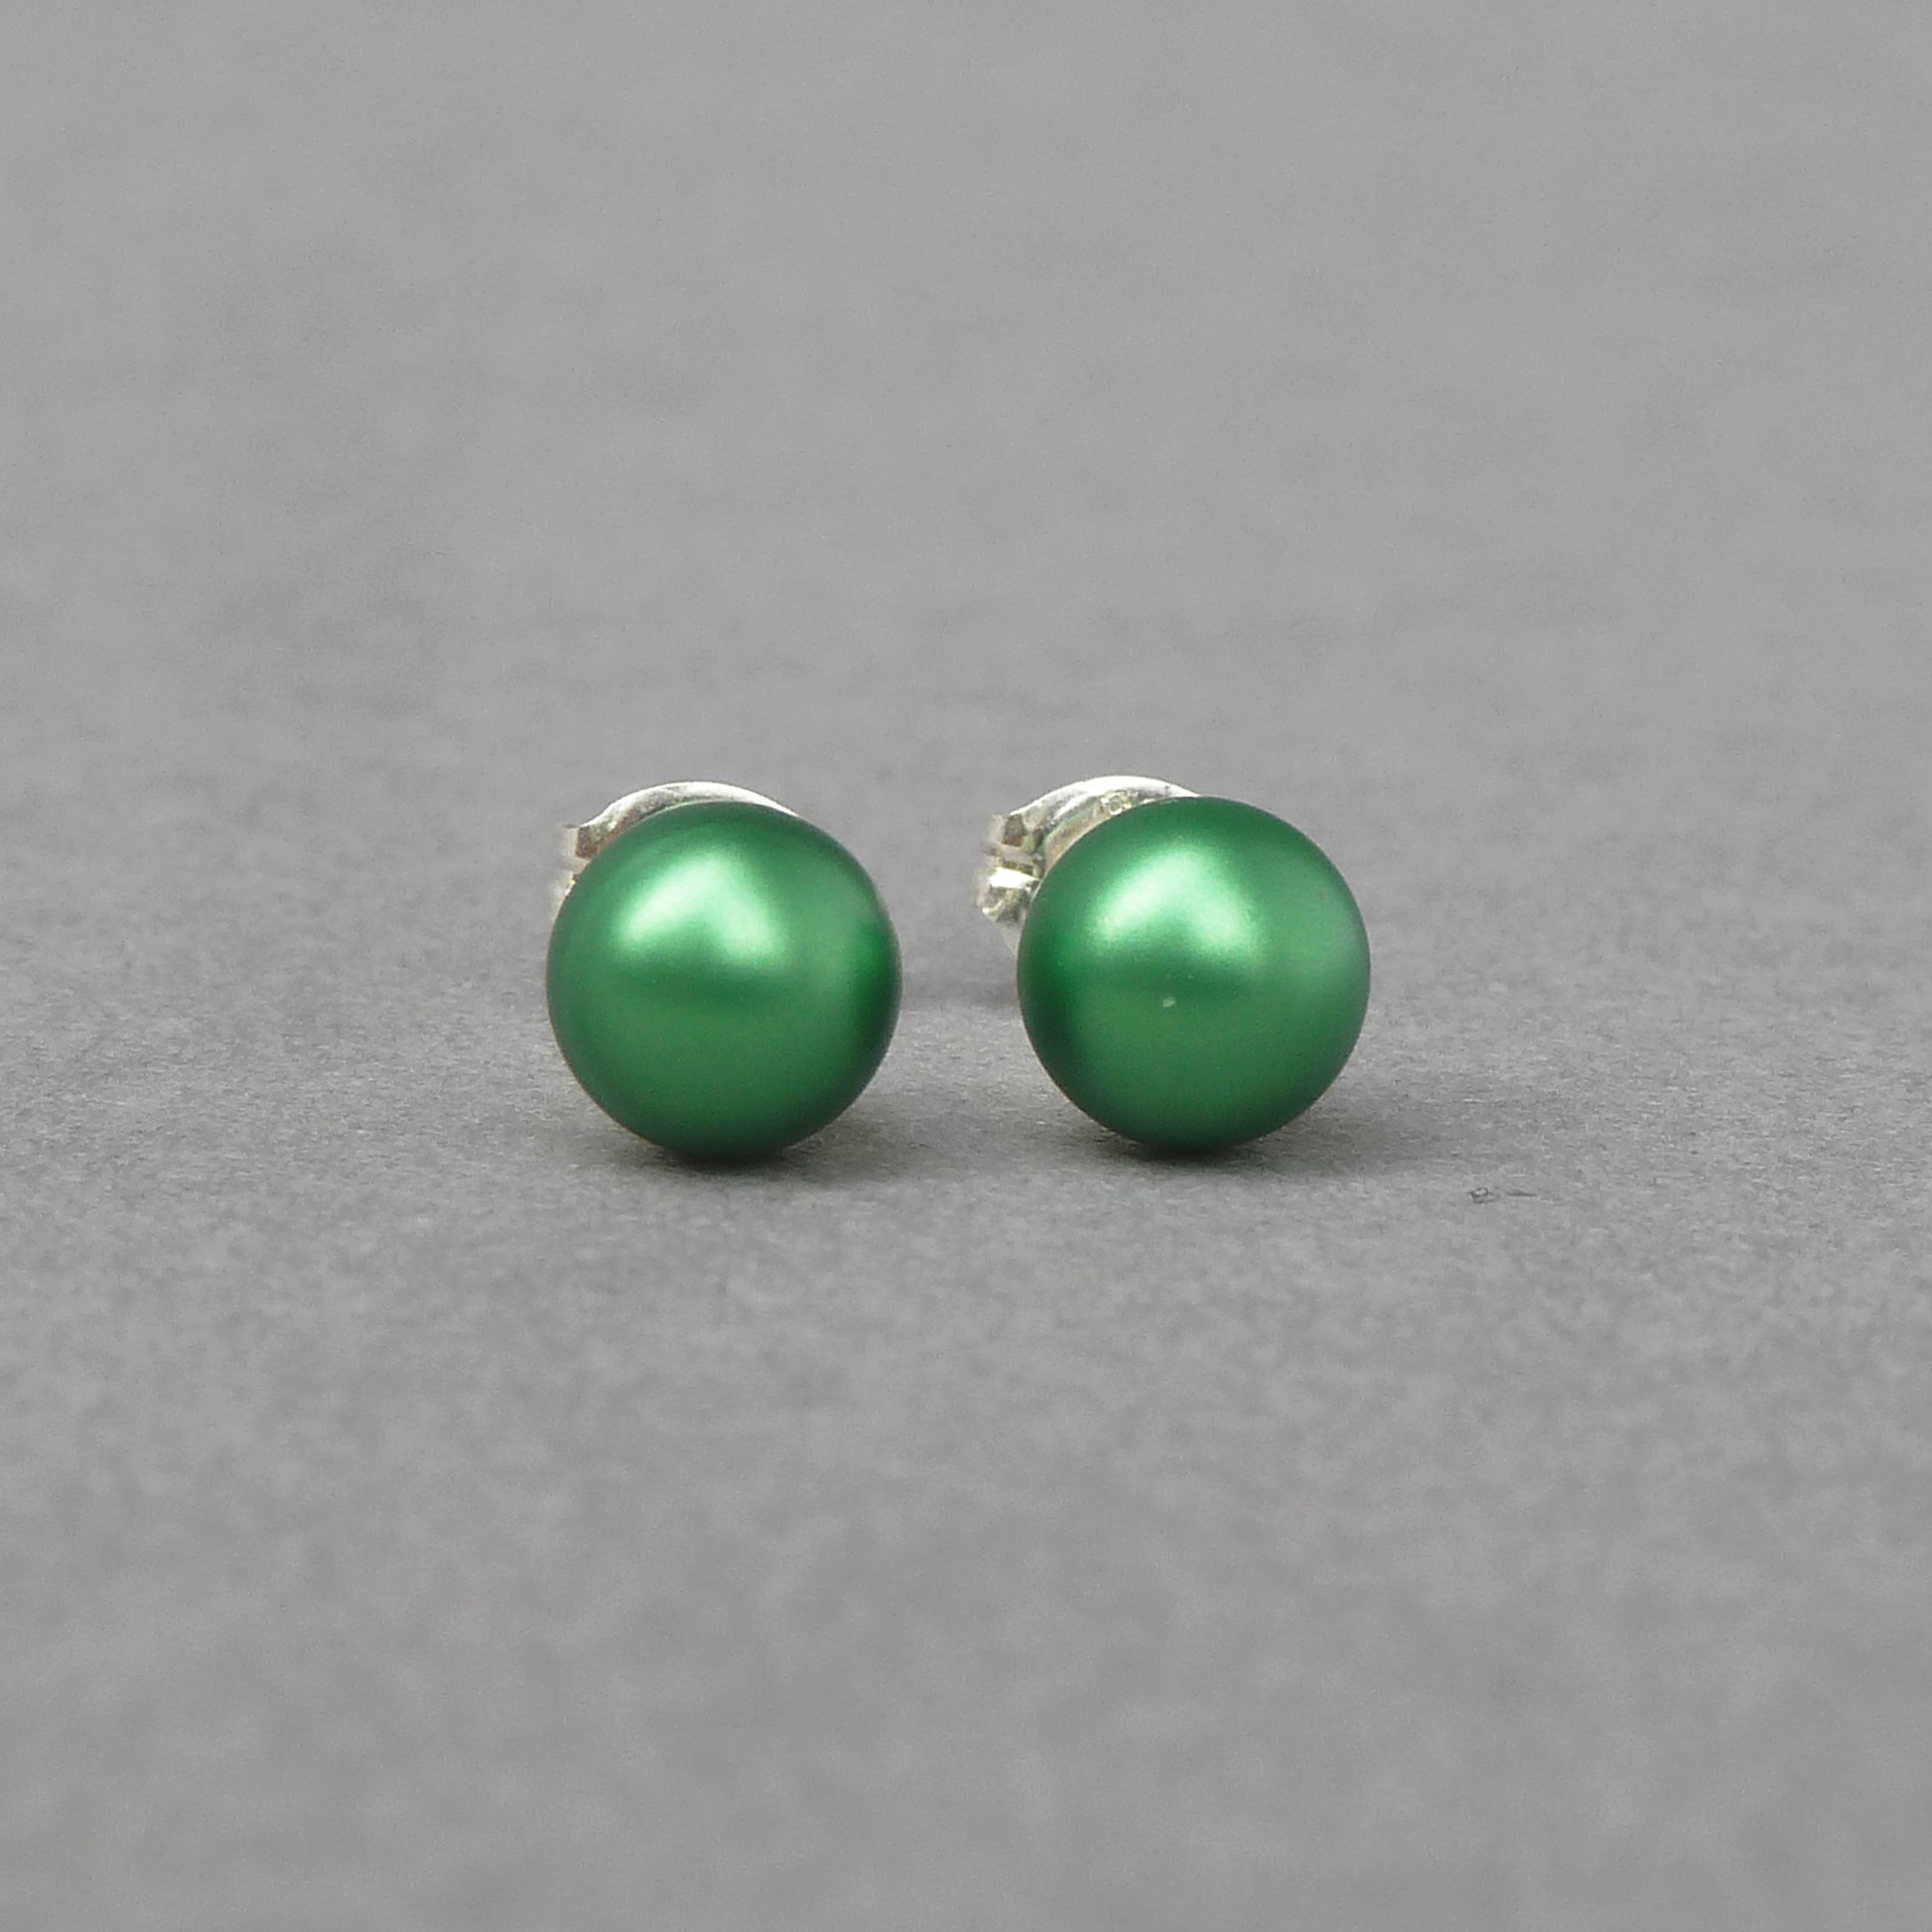 6mm green pearl stud earrings